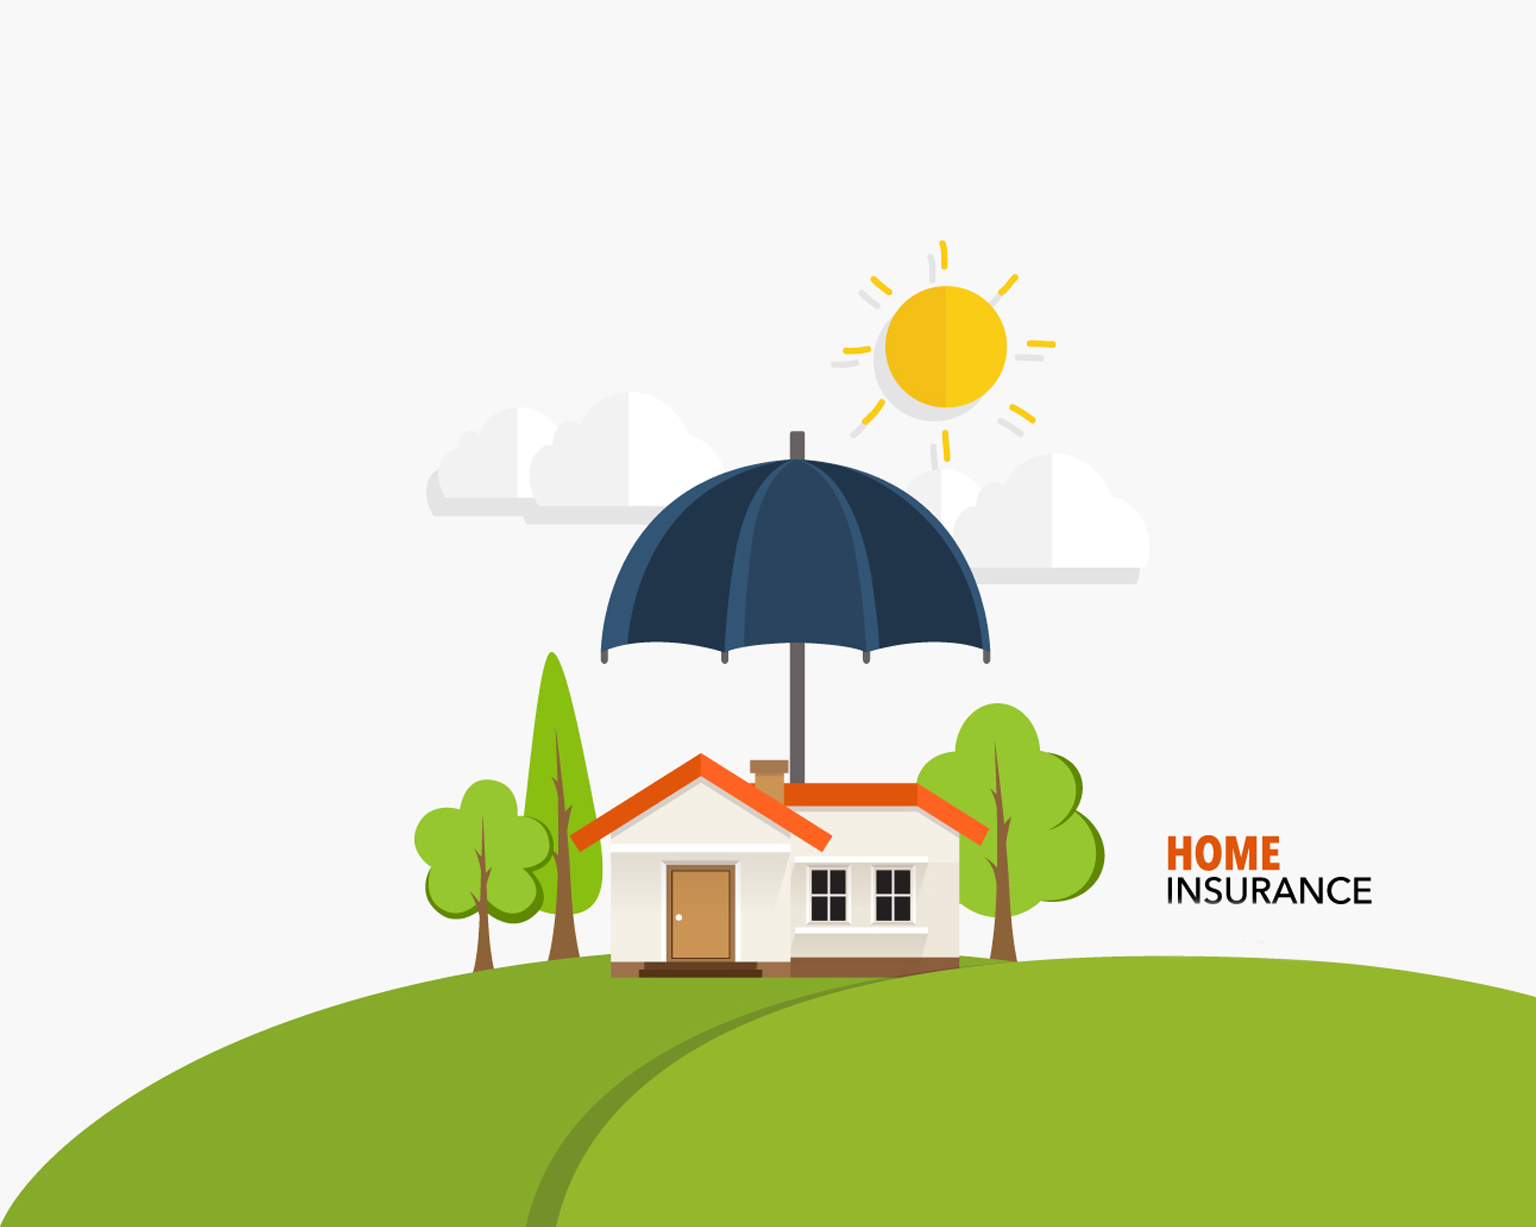 Home Insurance